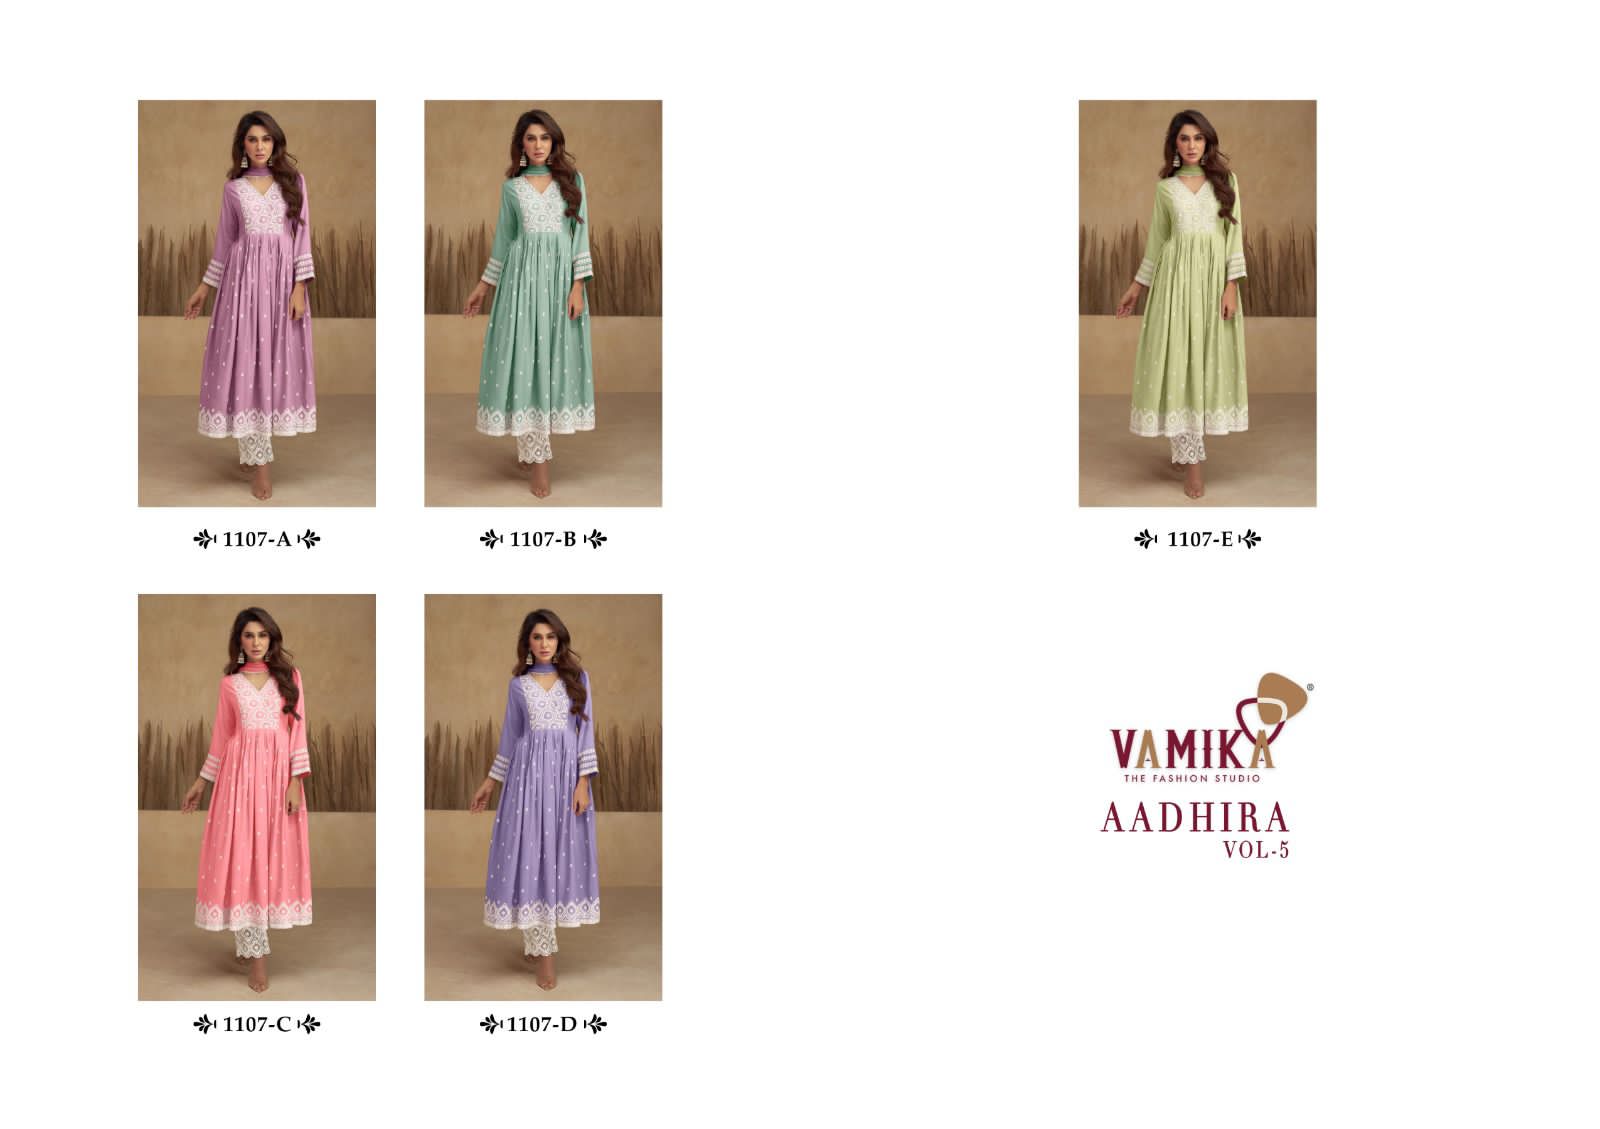 Vamika Aadhira Vol 5 collection 2